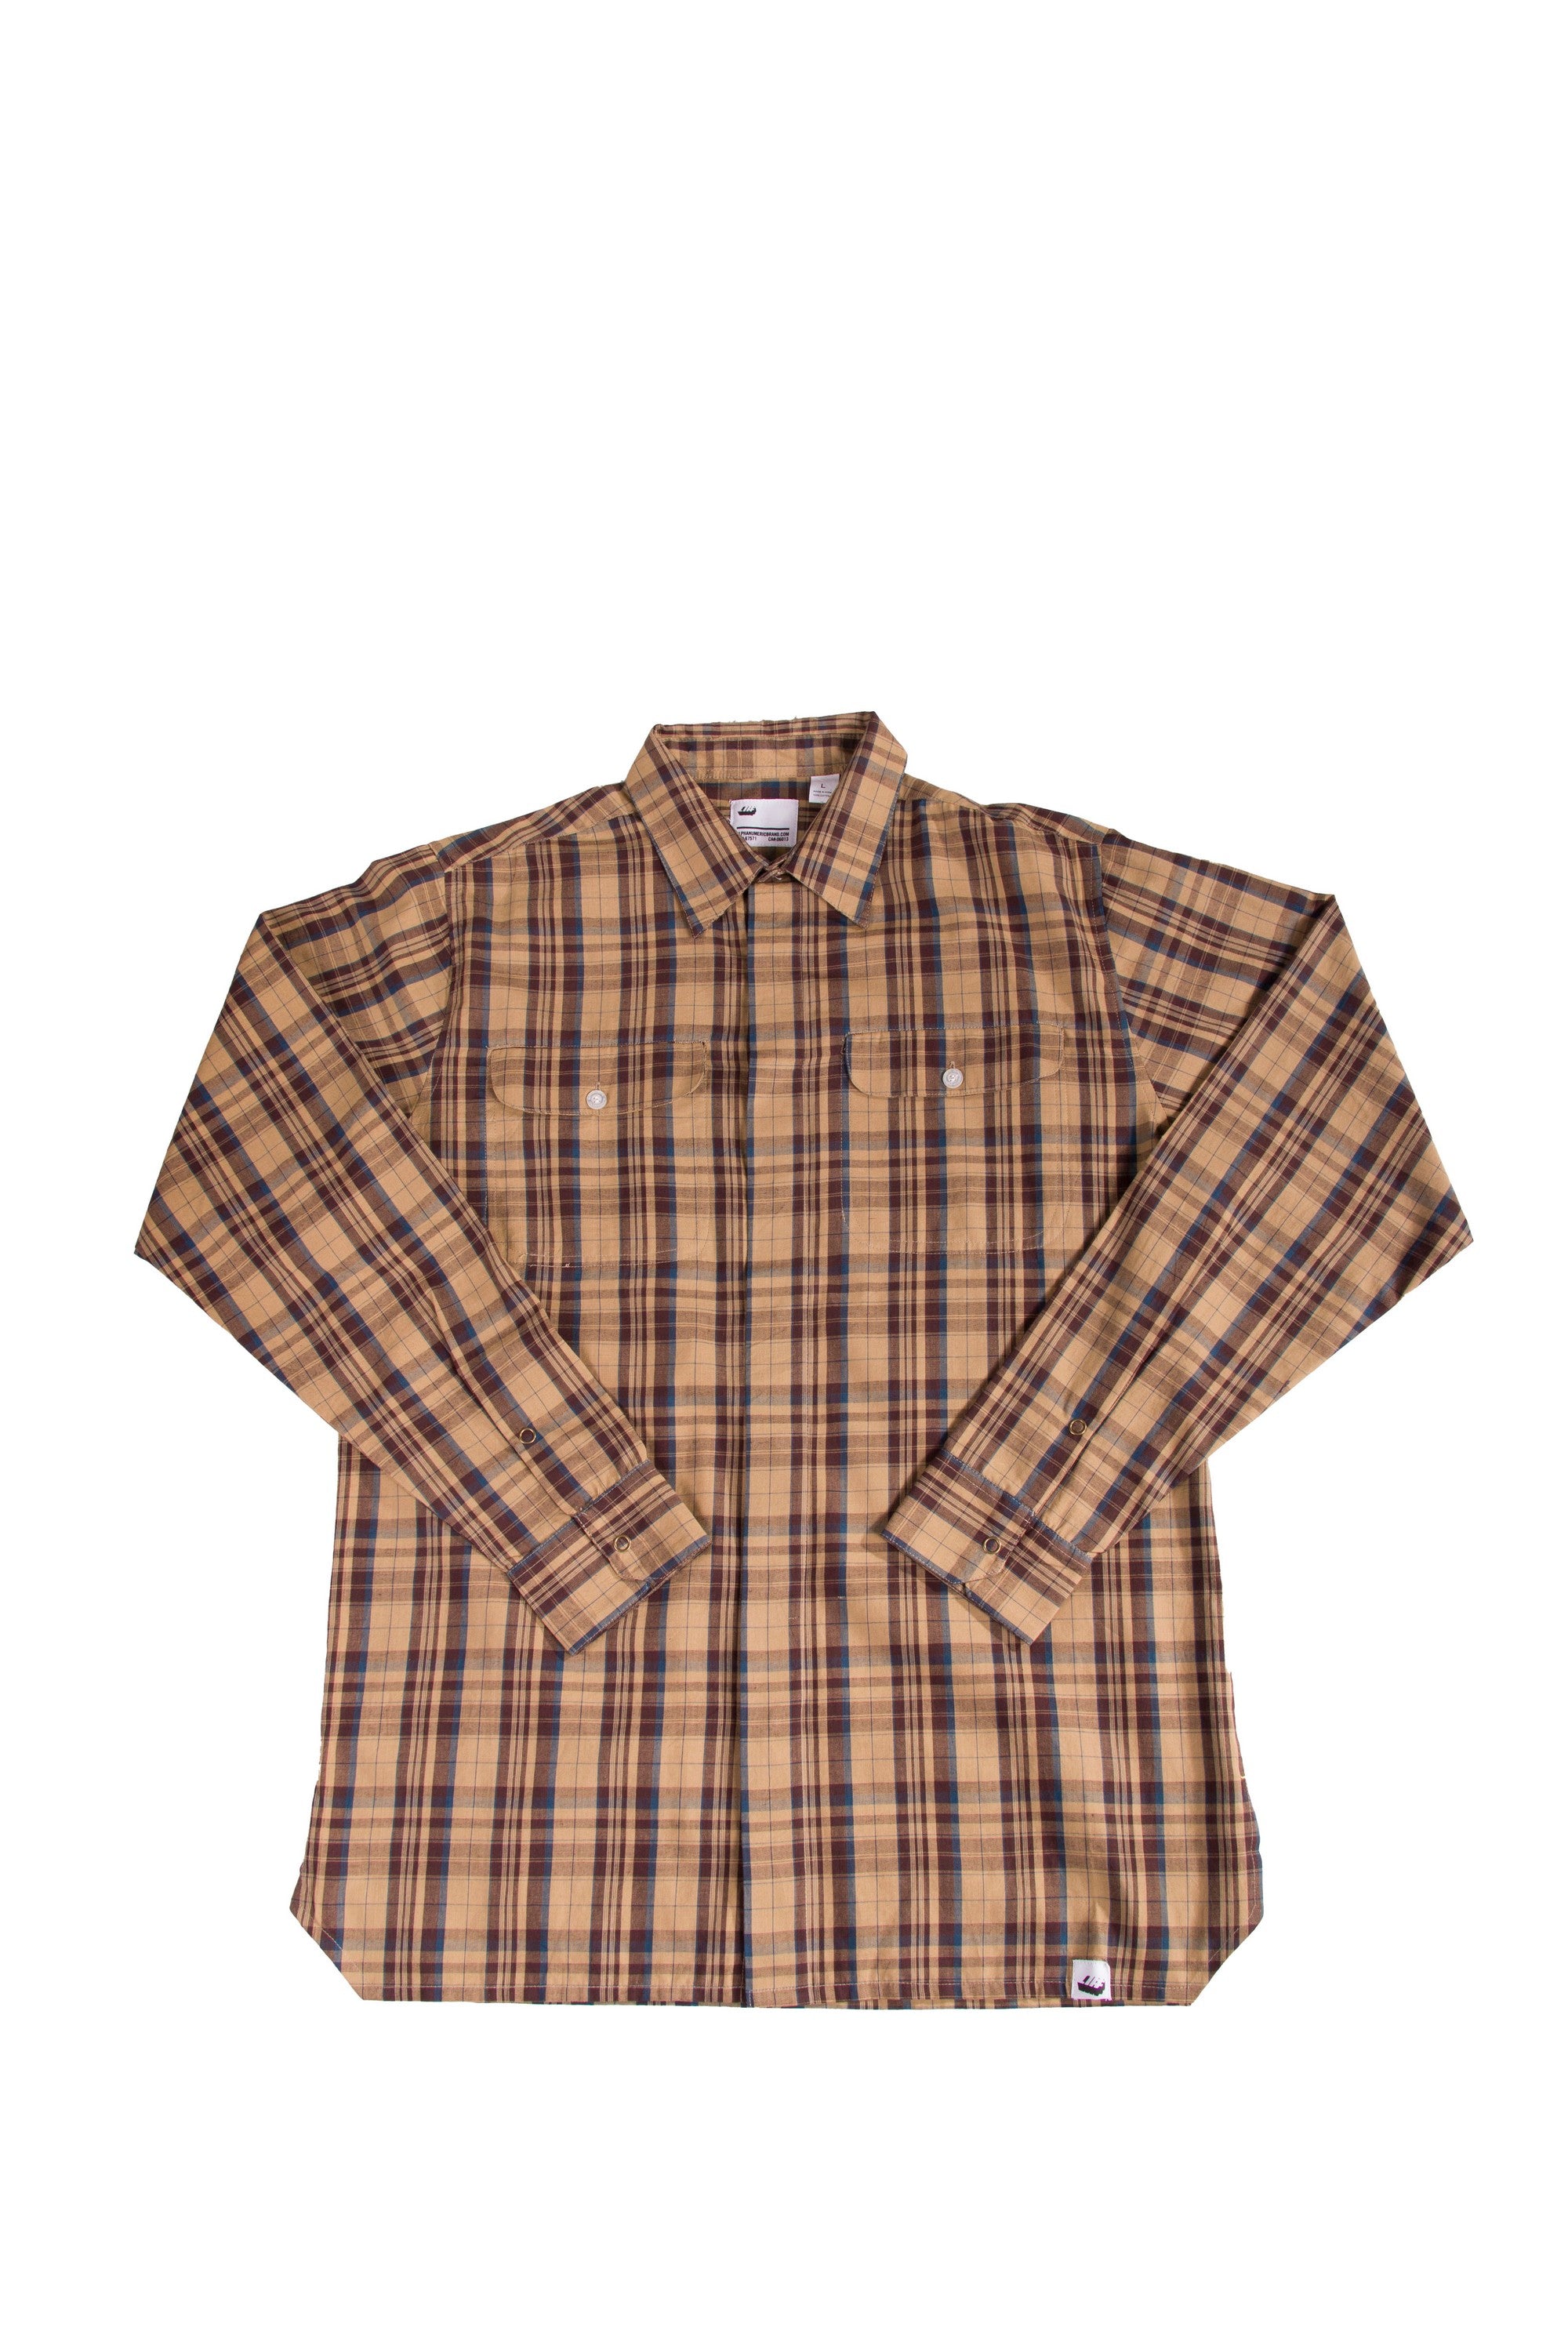 Alphanumeric Dooley 2-Pocket Plaid Long-sleeve Shirt